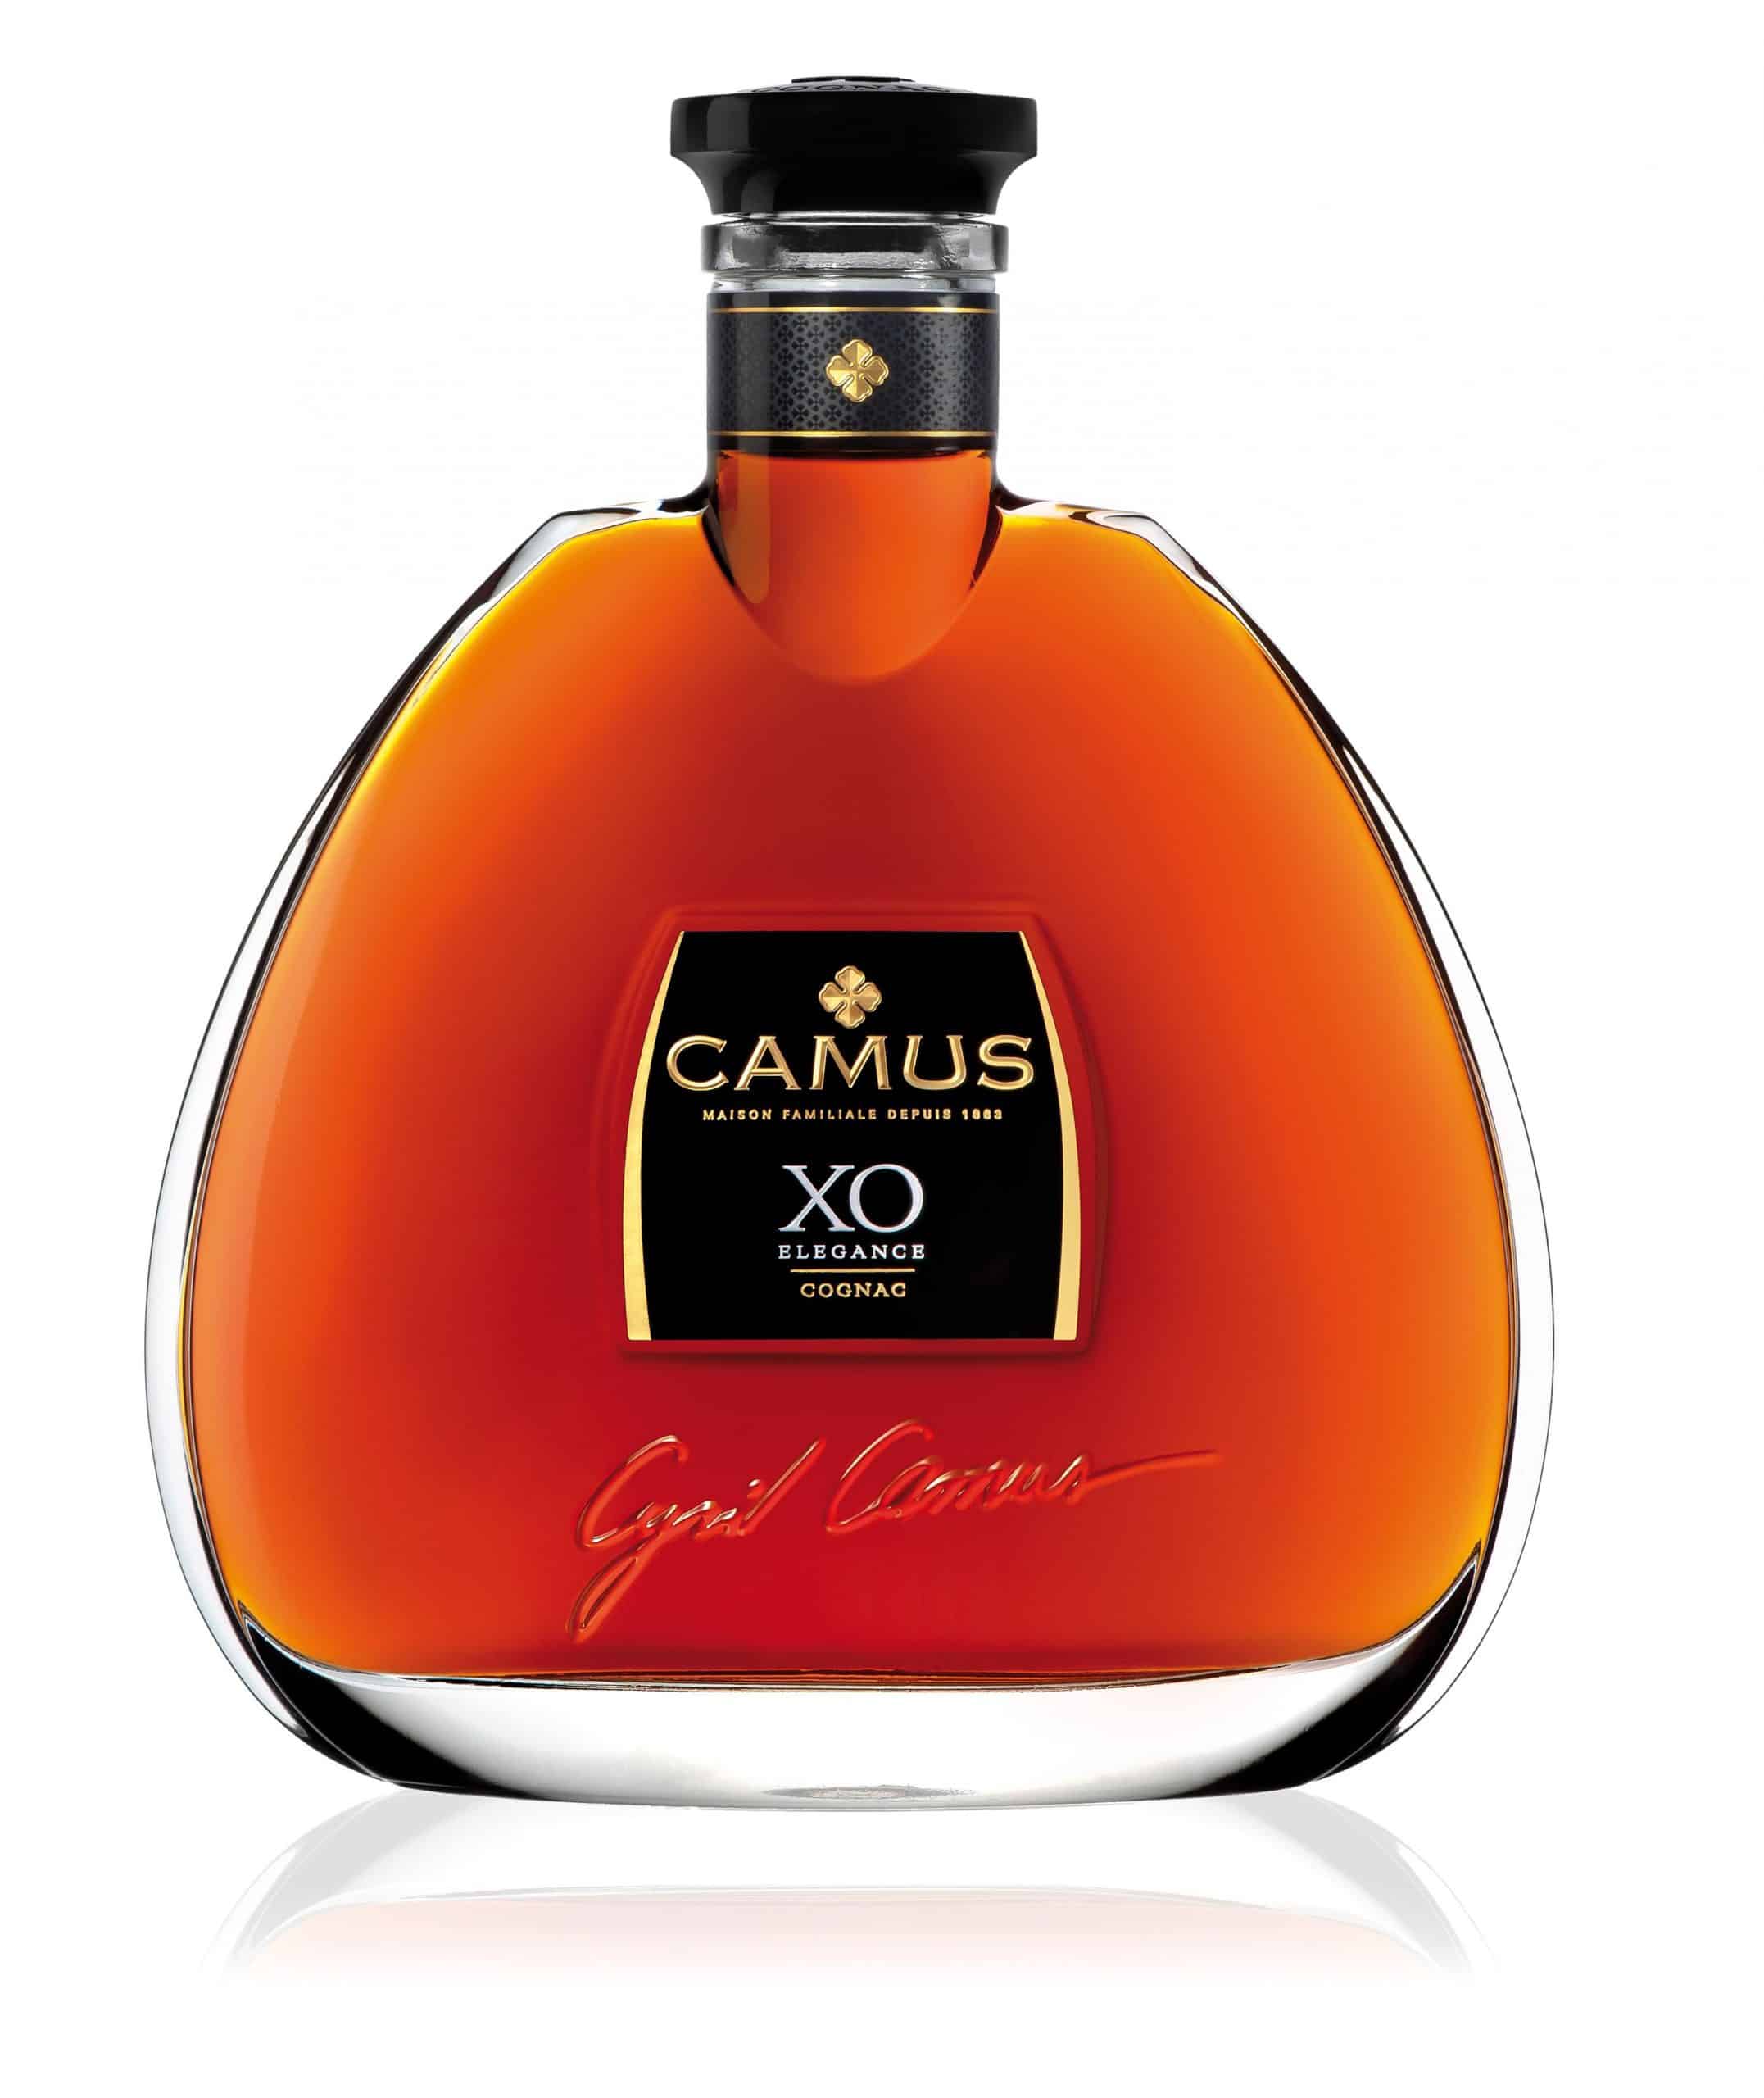 Camus XO Elegance Cognac: Buy Online and Find Prices on Cognac